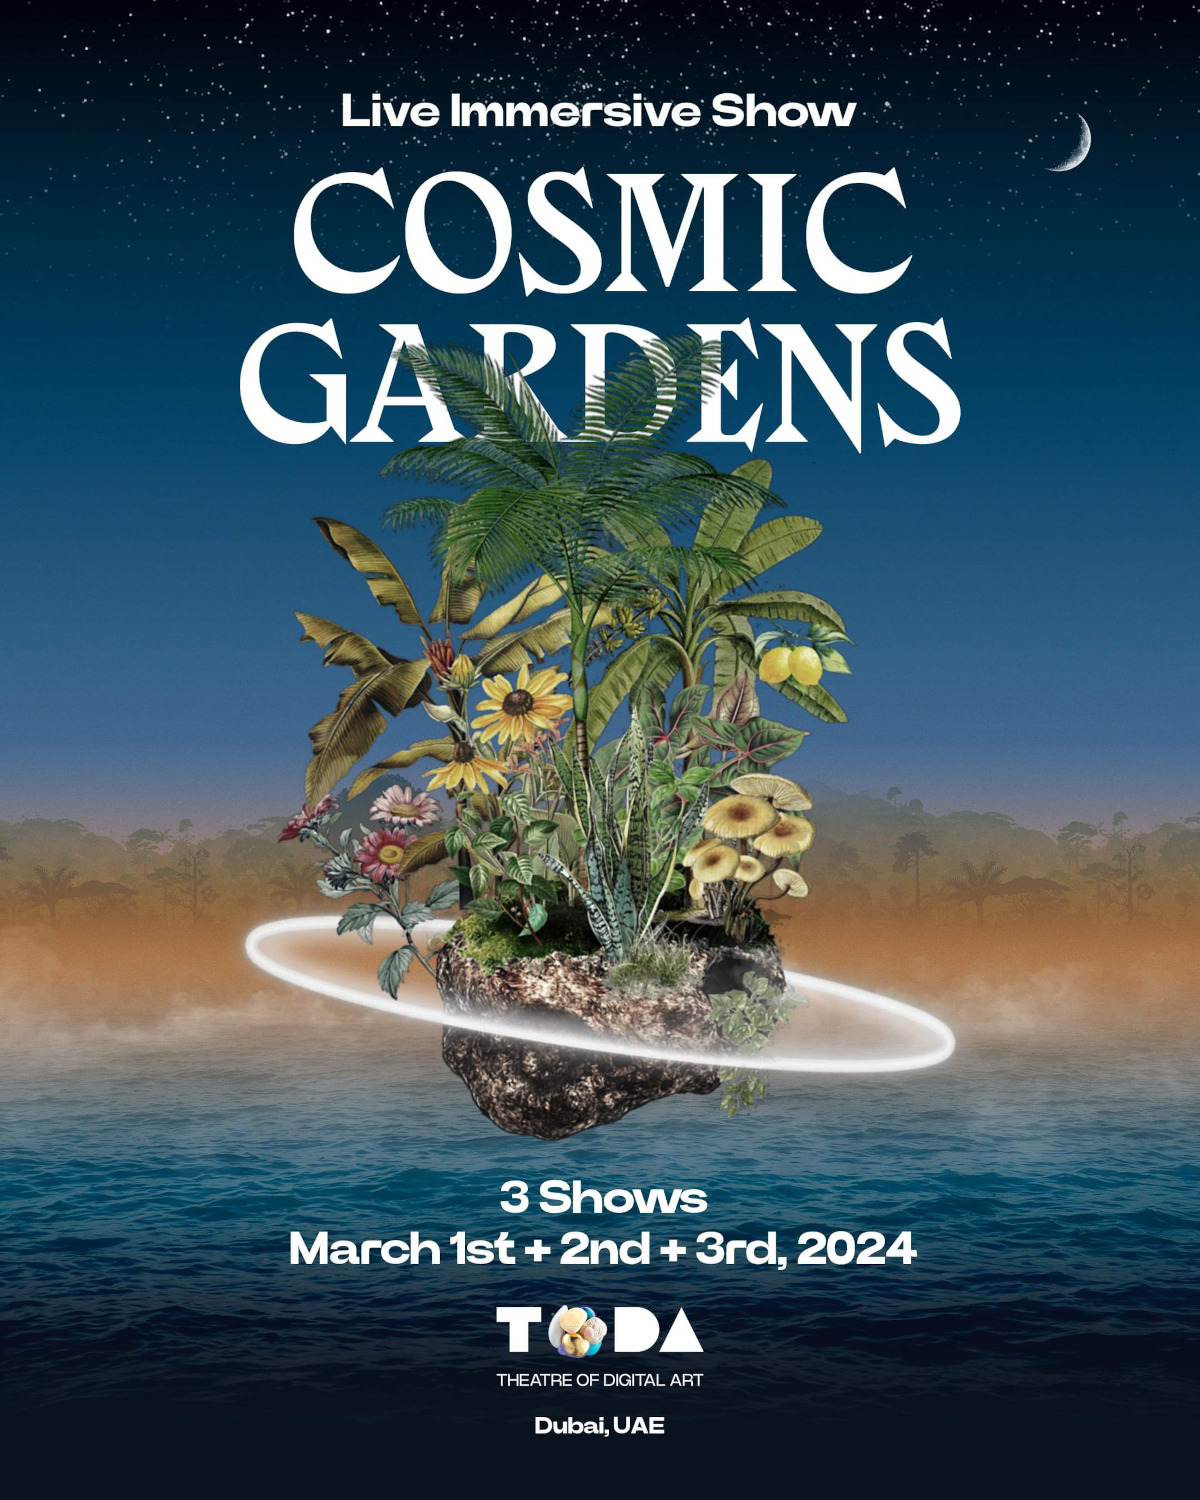 Cosmic Gardens immersive show in Dubai